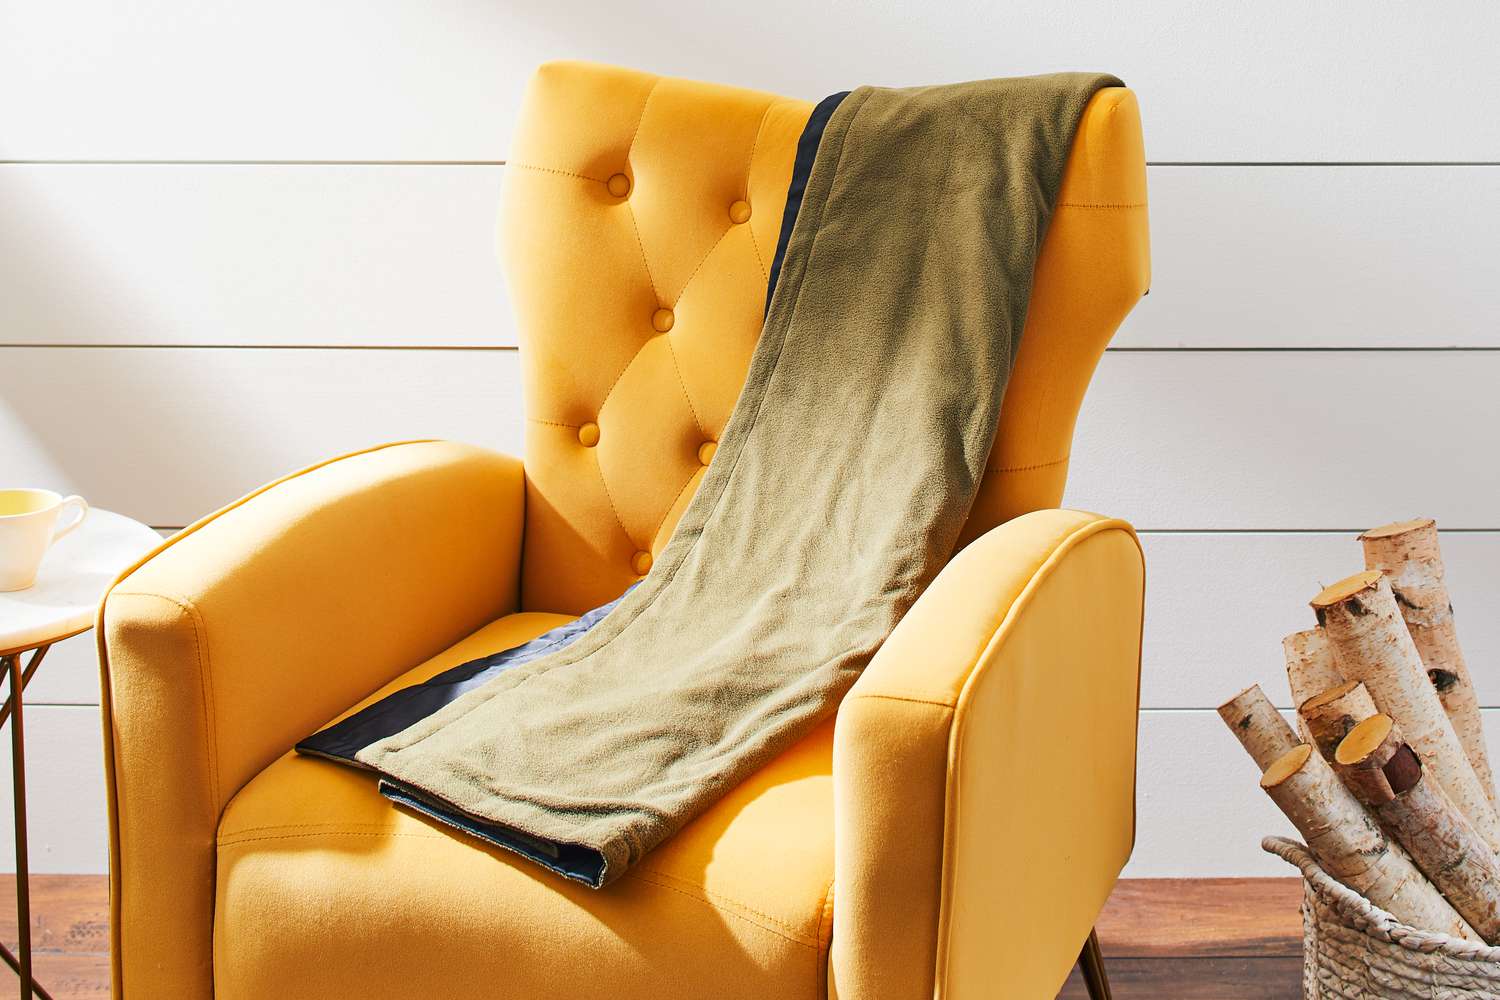 Eddie Bauer Portable Heated Throw Blanket draped over a chair